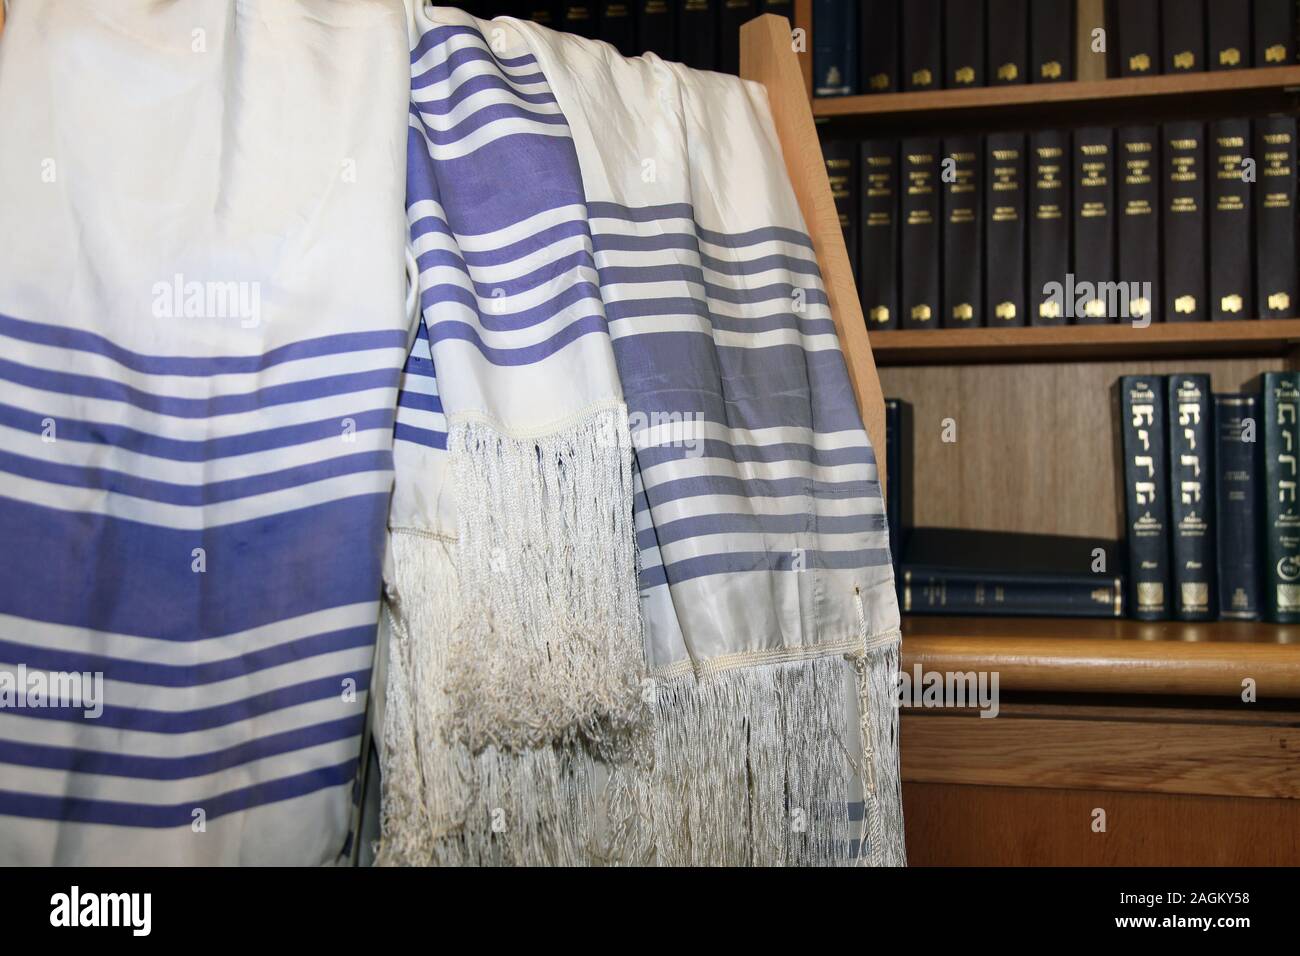 A rack of Jewish Tallit prayer shawls hang at the entrance of a Synagogue Stock Photo